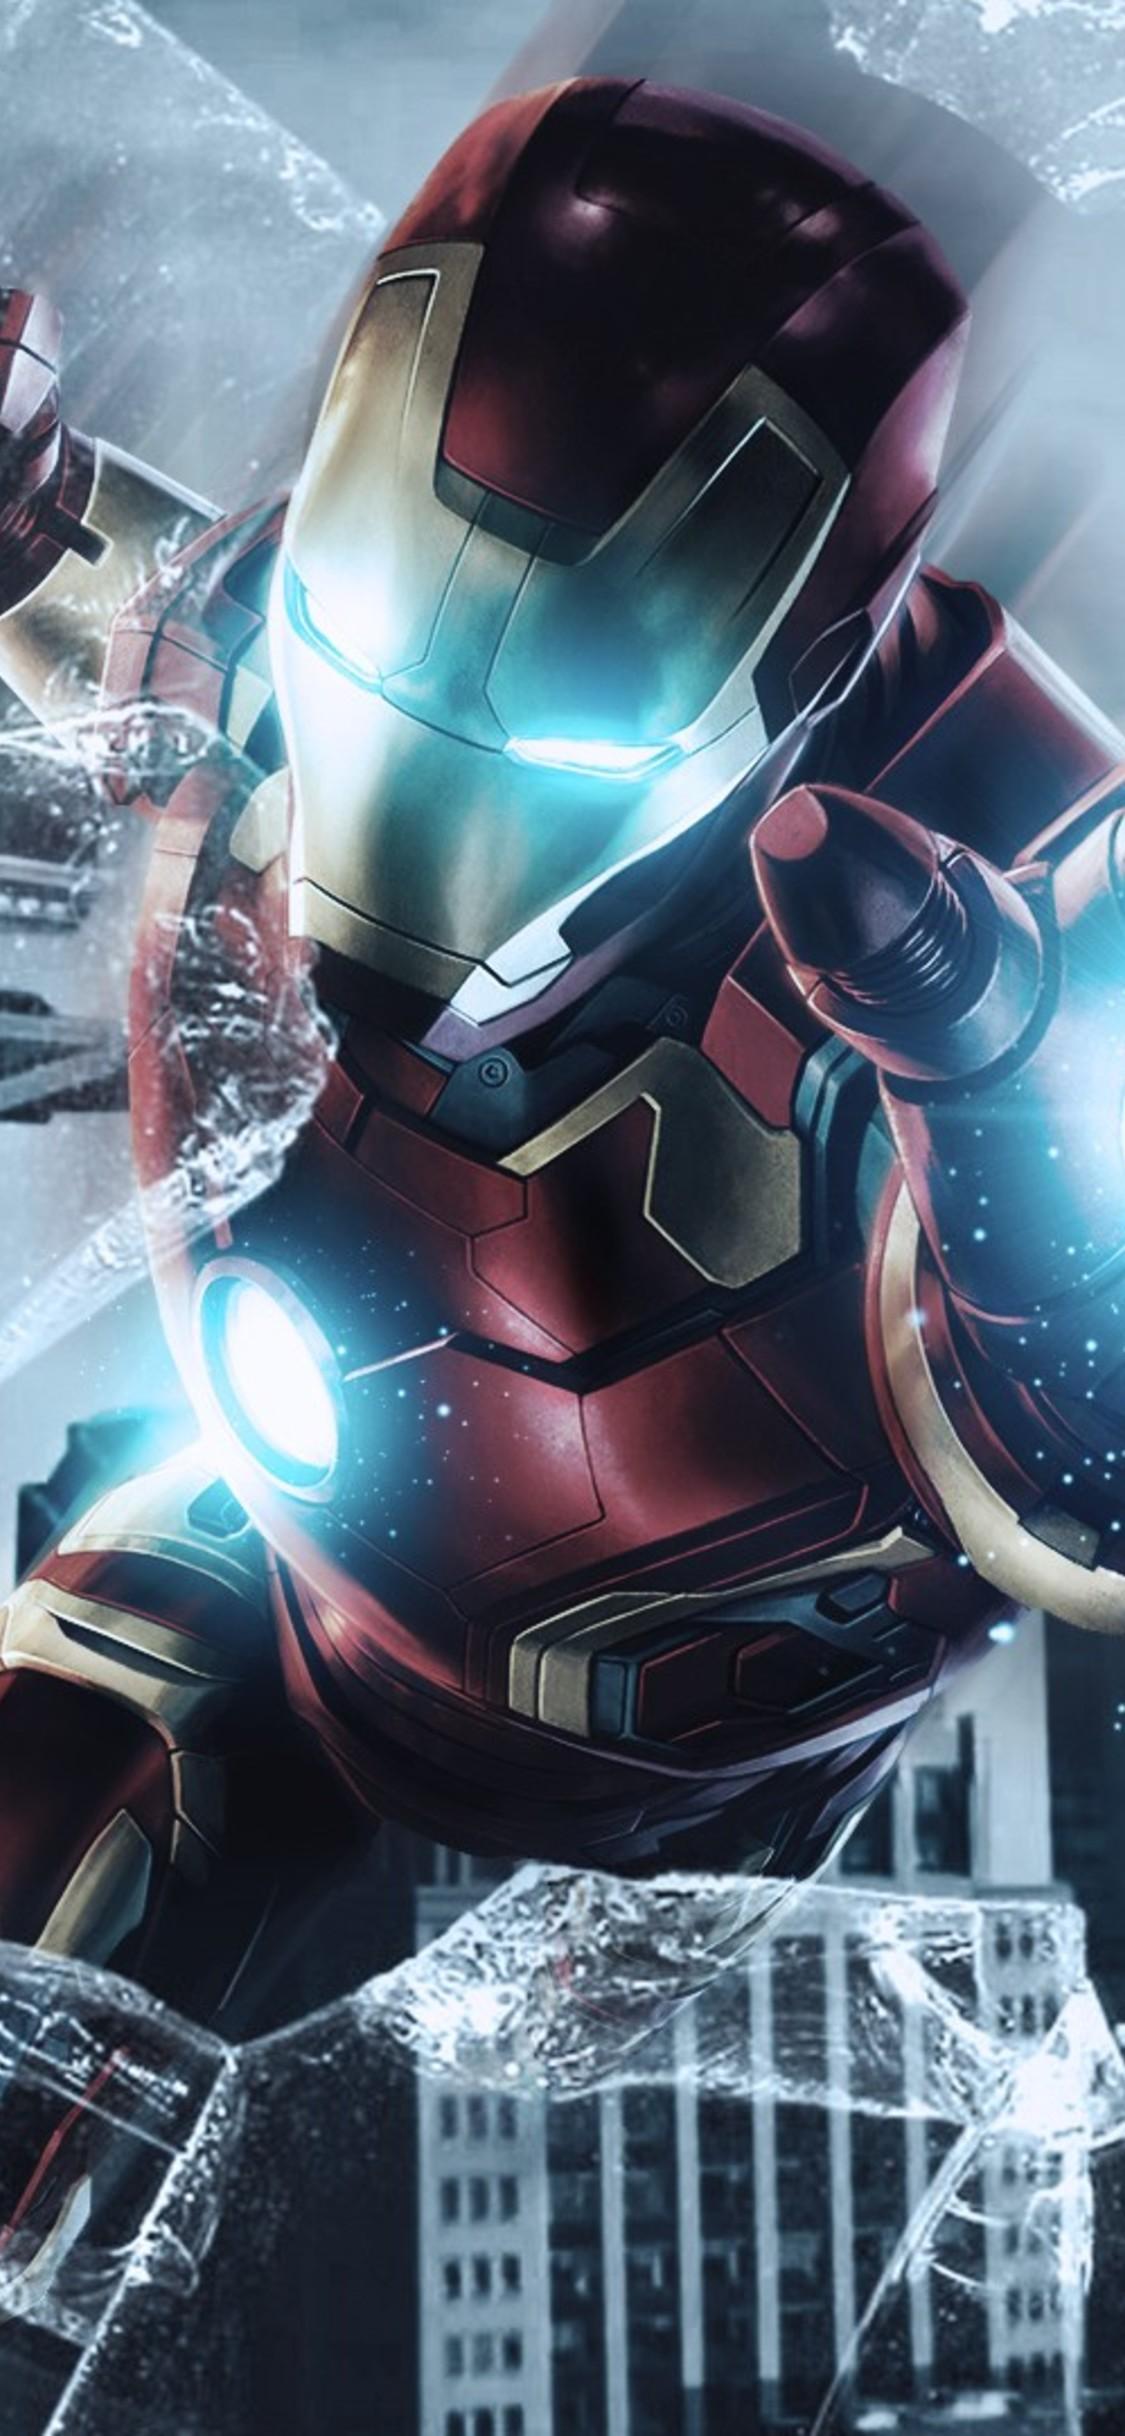 Iron Man Avengers Endgame Poster iPhone XS, iPhone